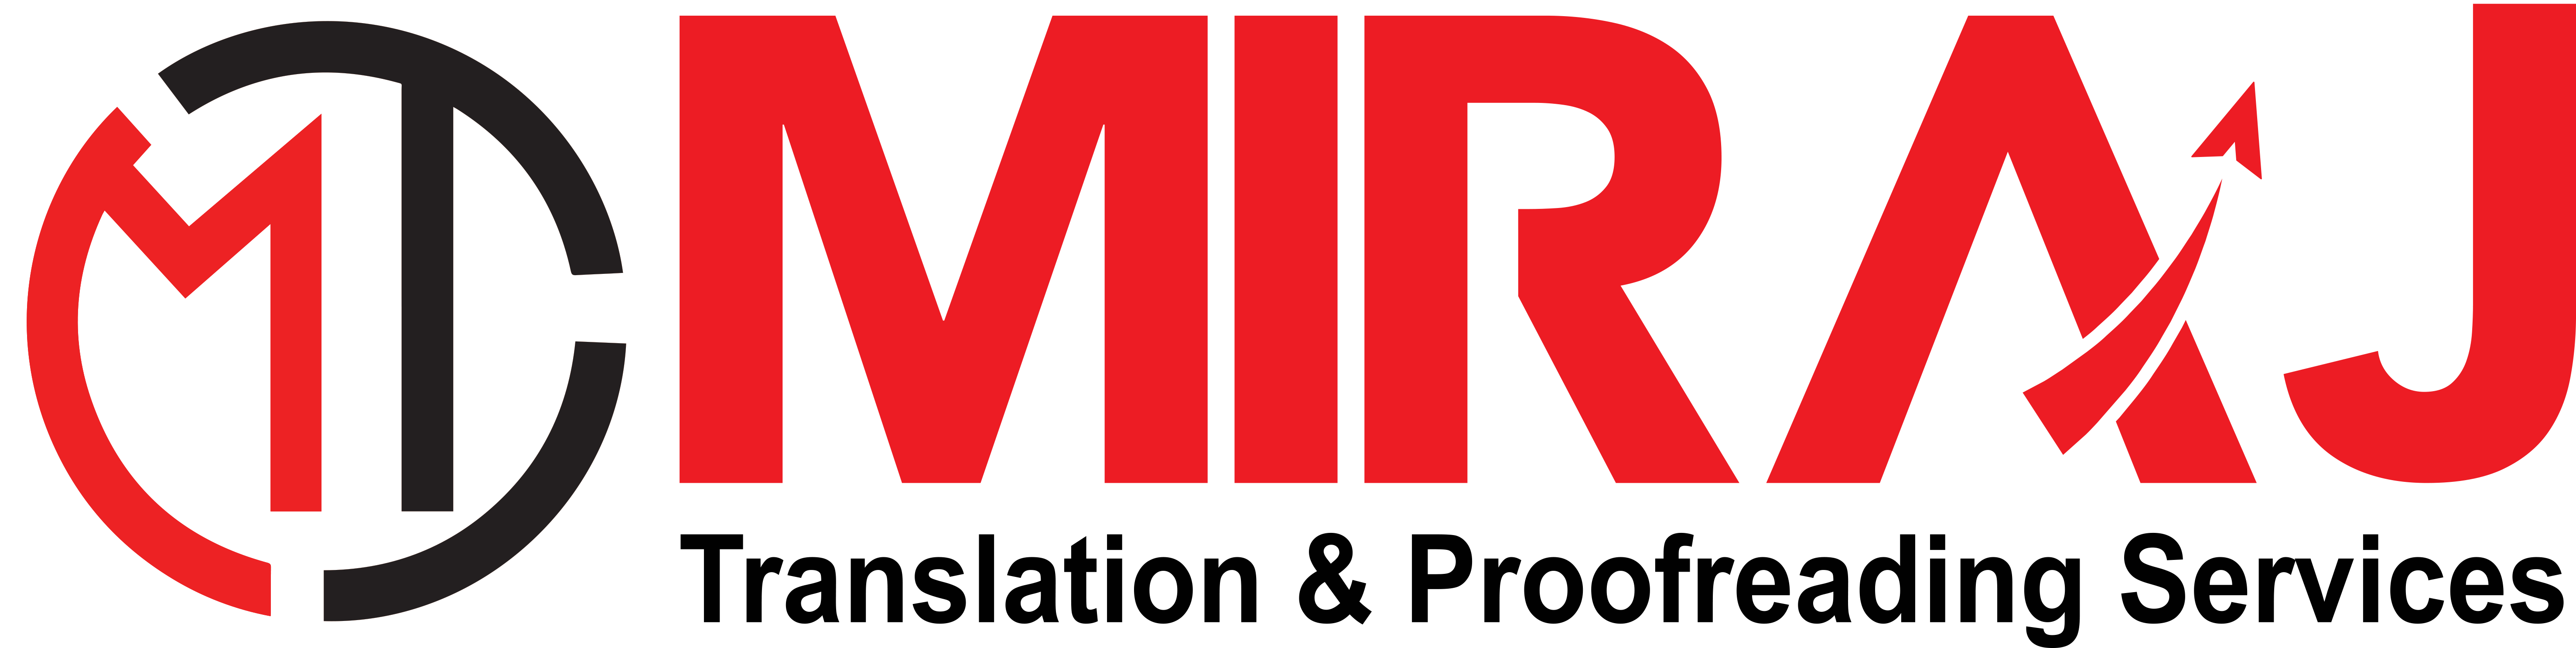 Miraj Translation & Proofreading Services